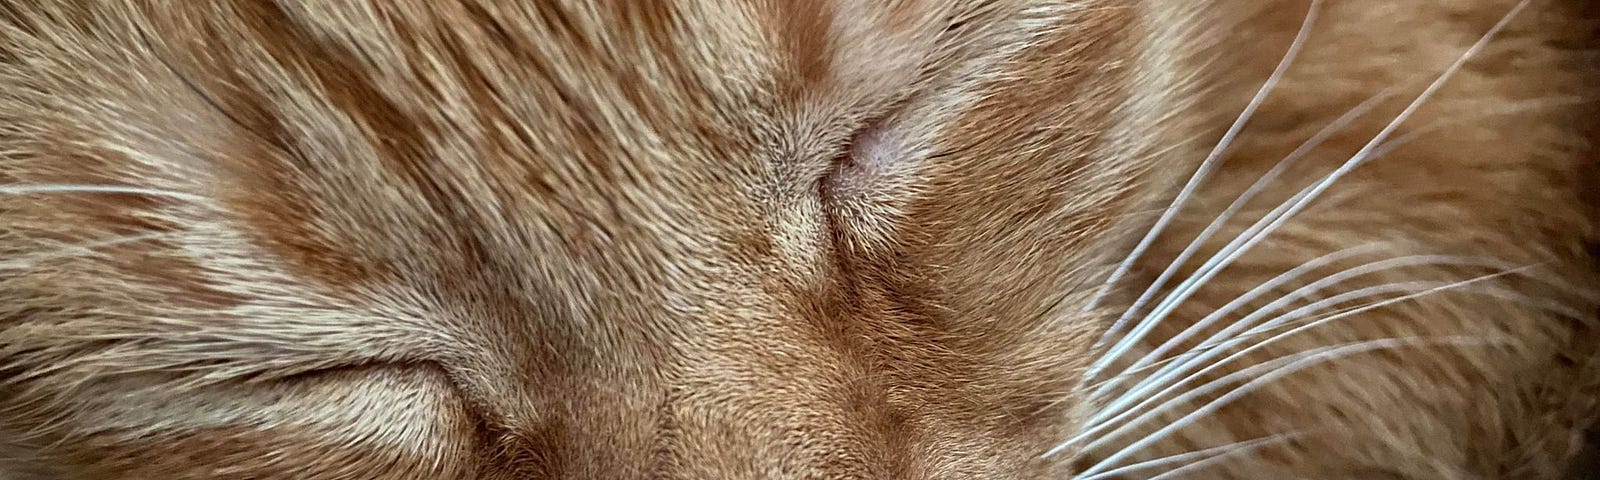 Closeup of grandkitty Bouy, an orange tabby, sound asleep